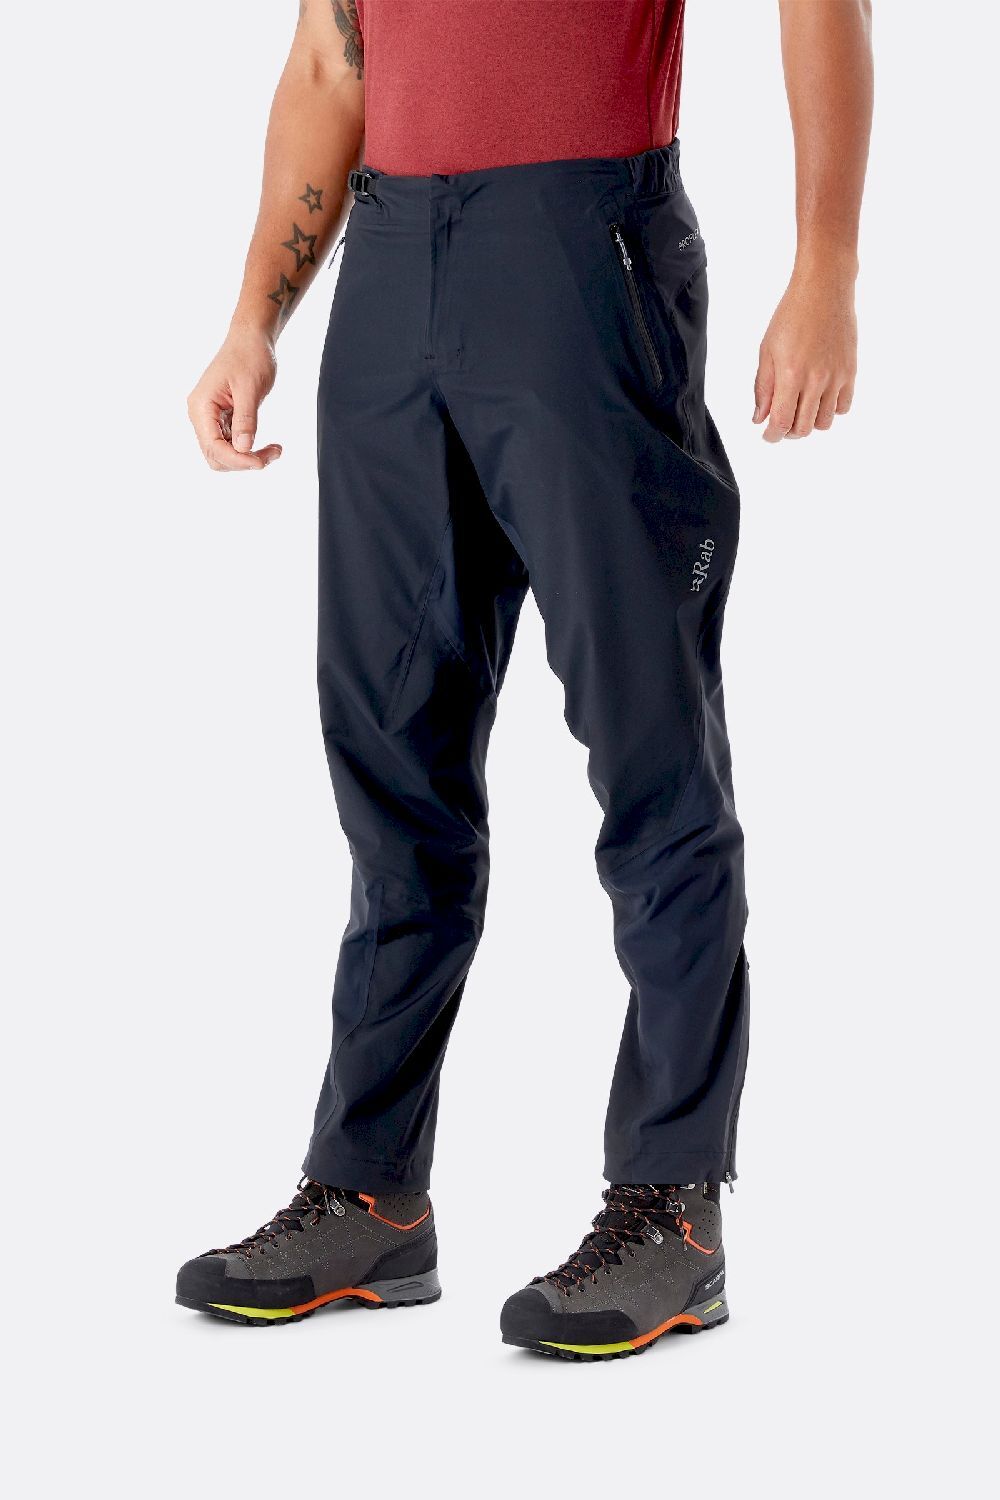 Rab Kinetic Alpine 2.0 Pants - Pantaloni antipioggia - Uomo